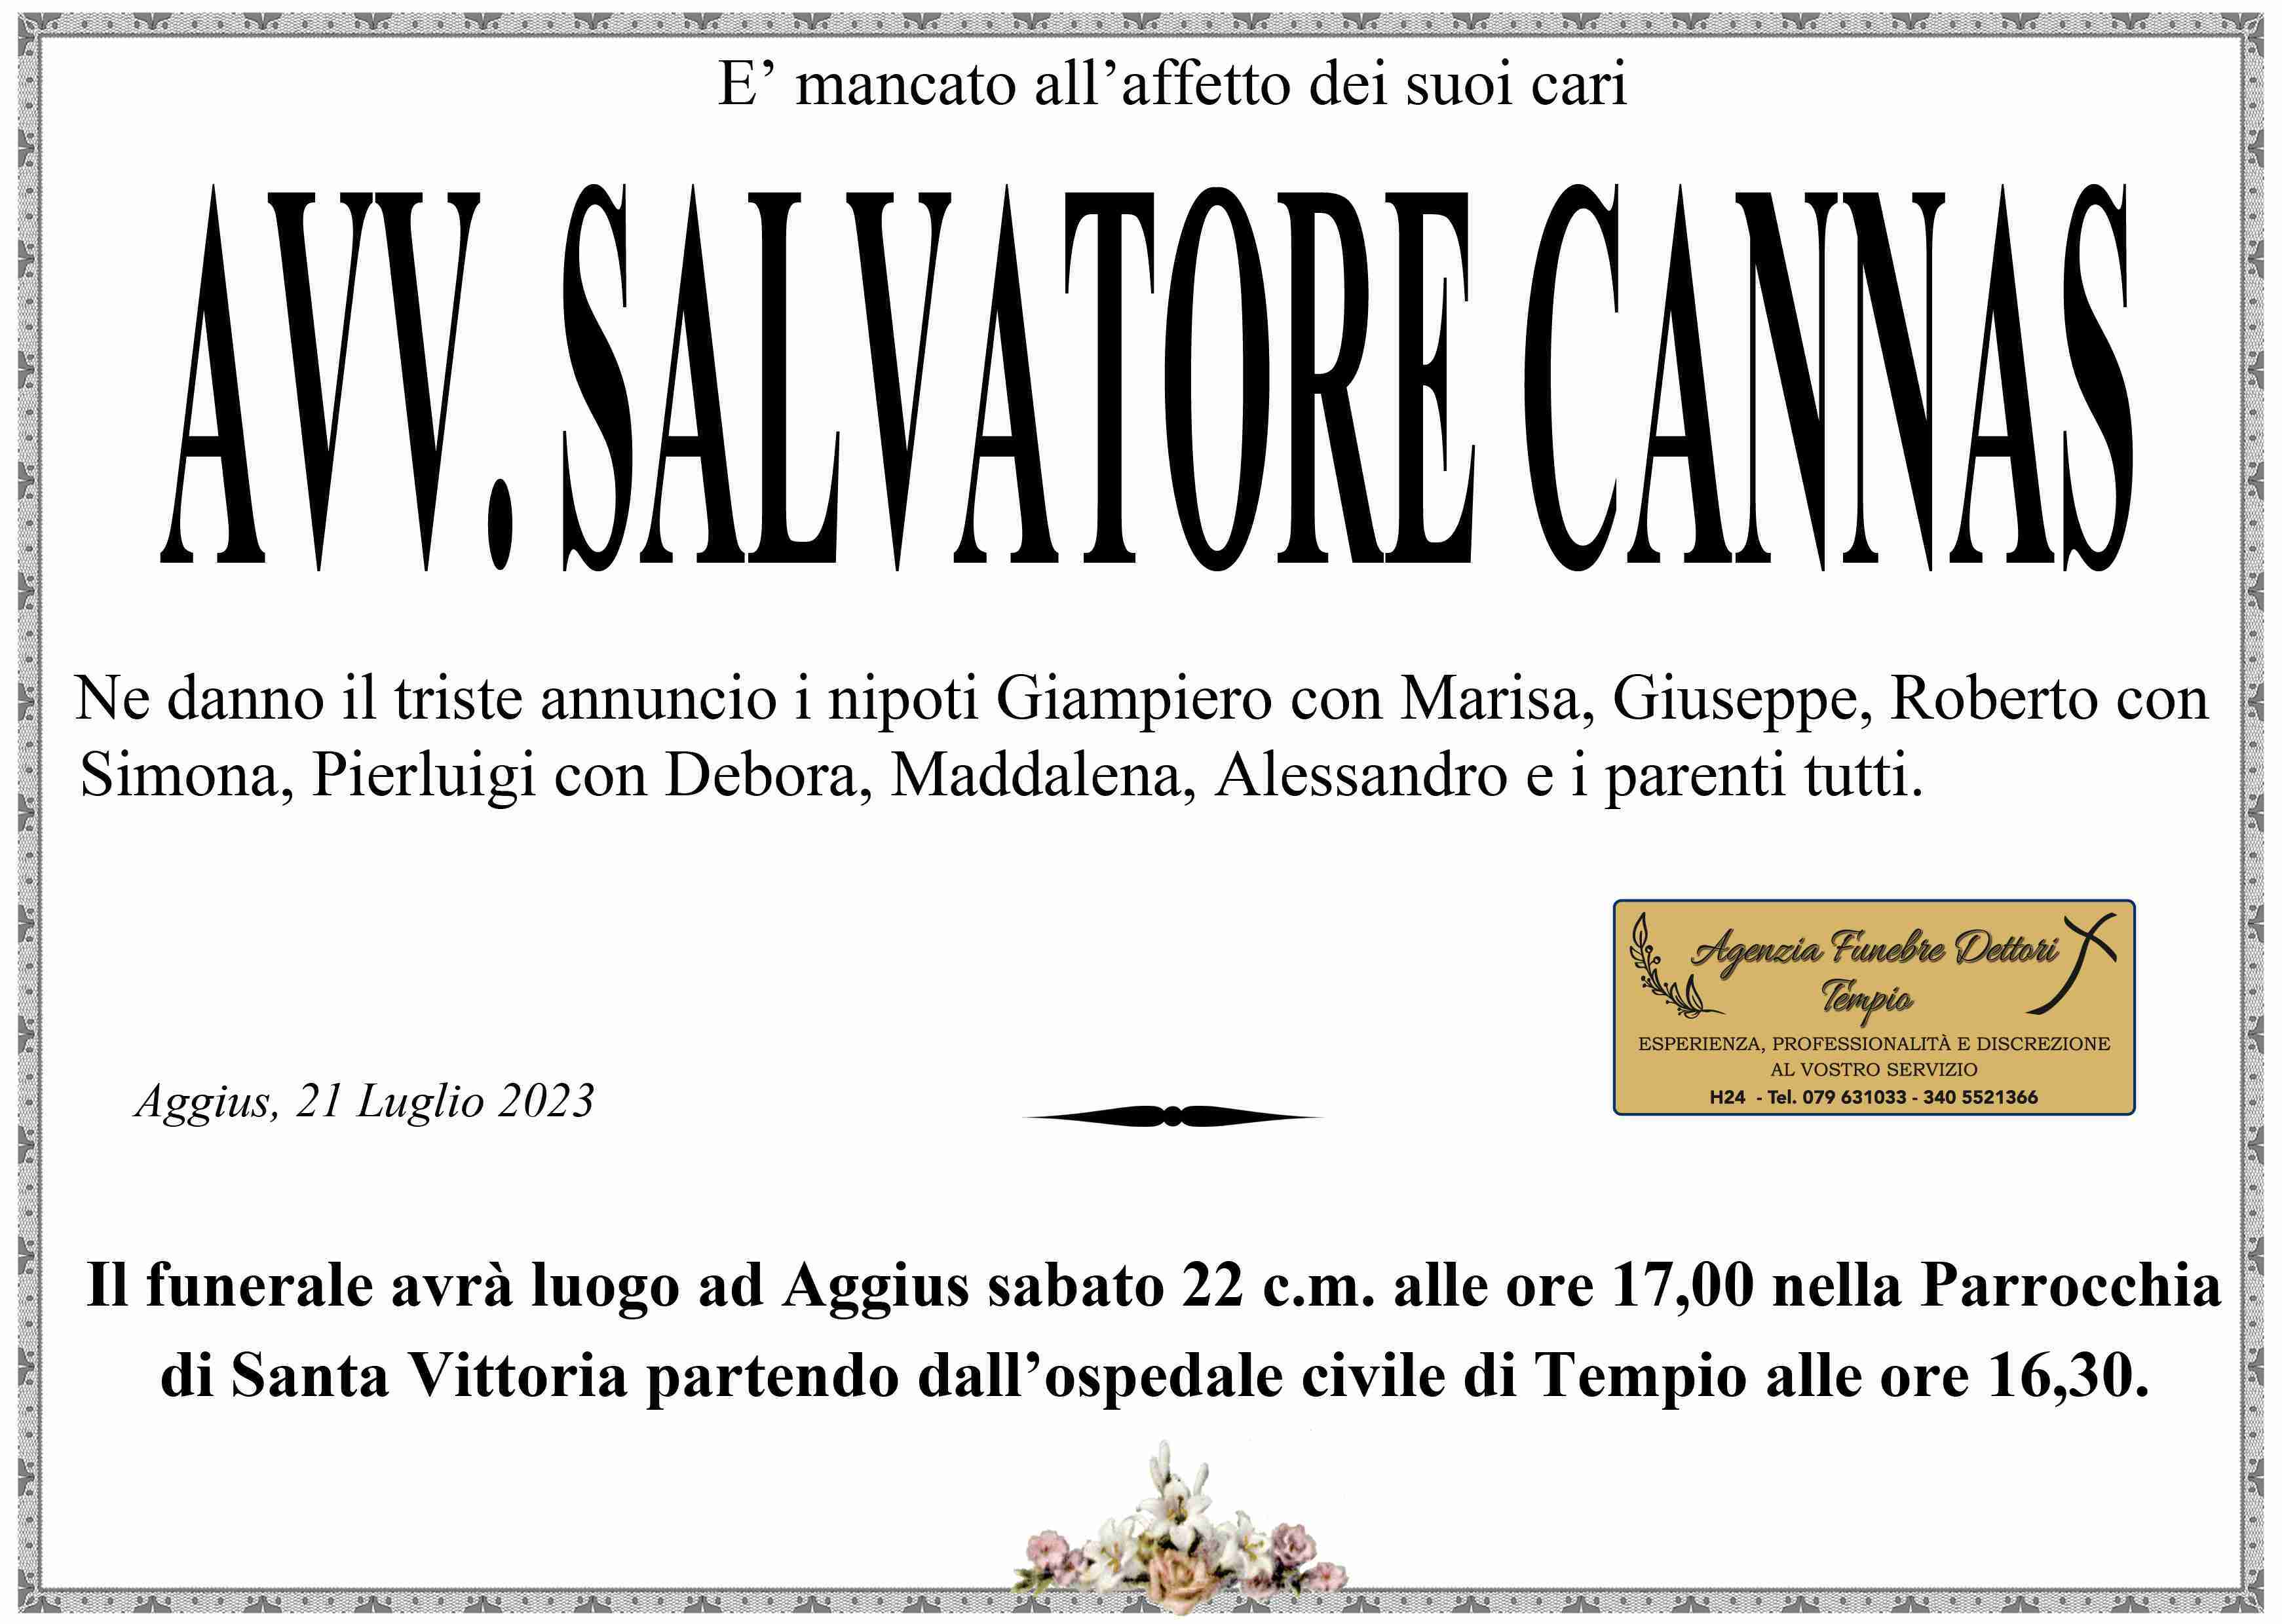 Salvatore Andrea Cannas